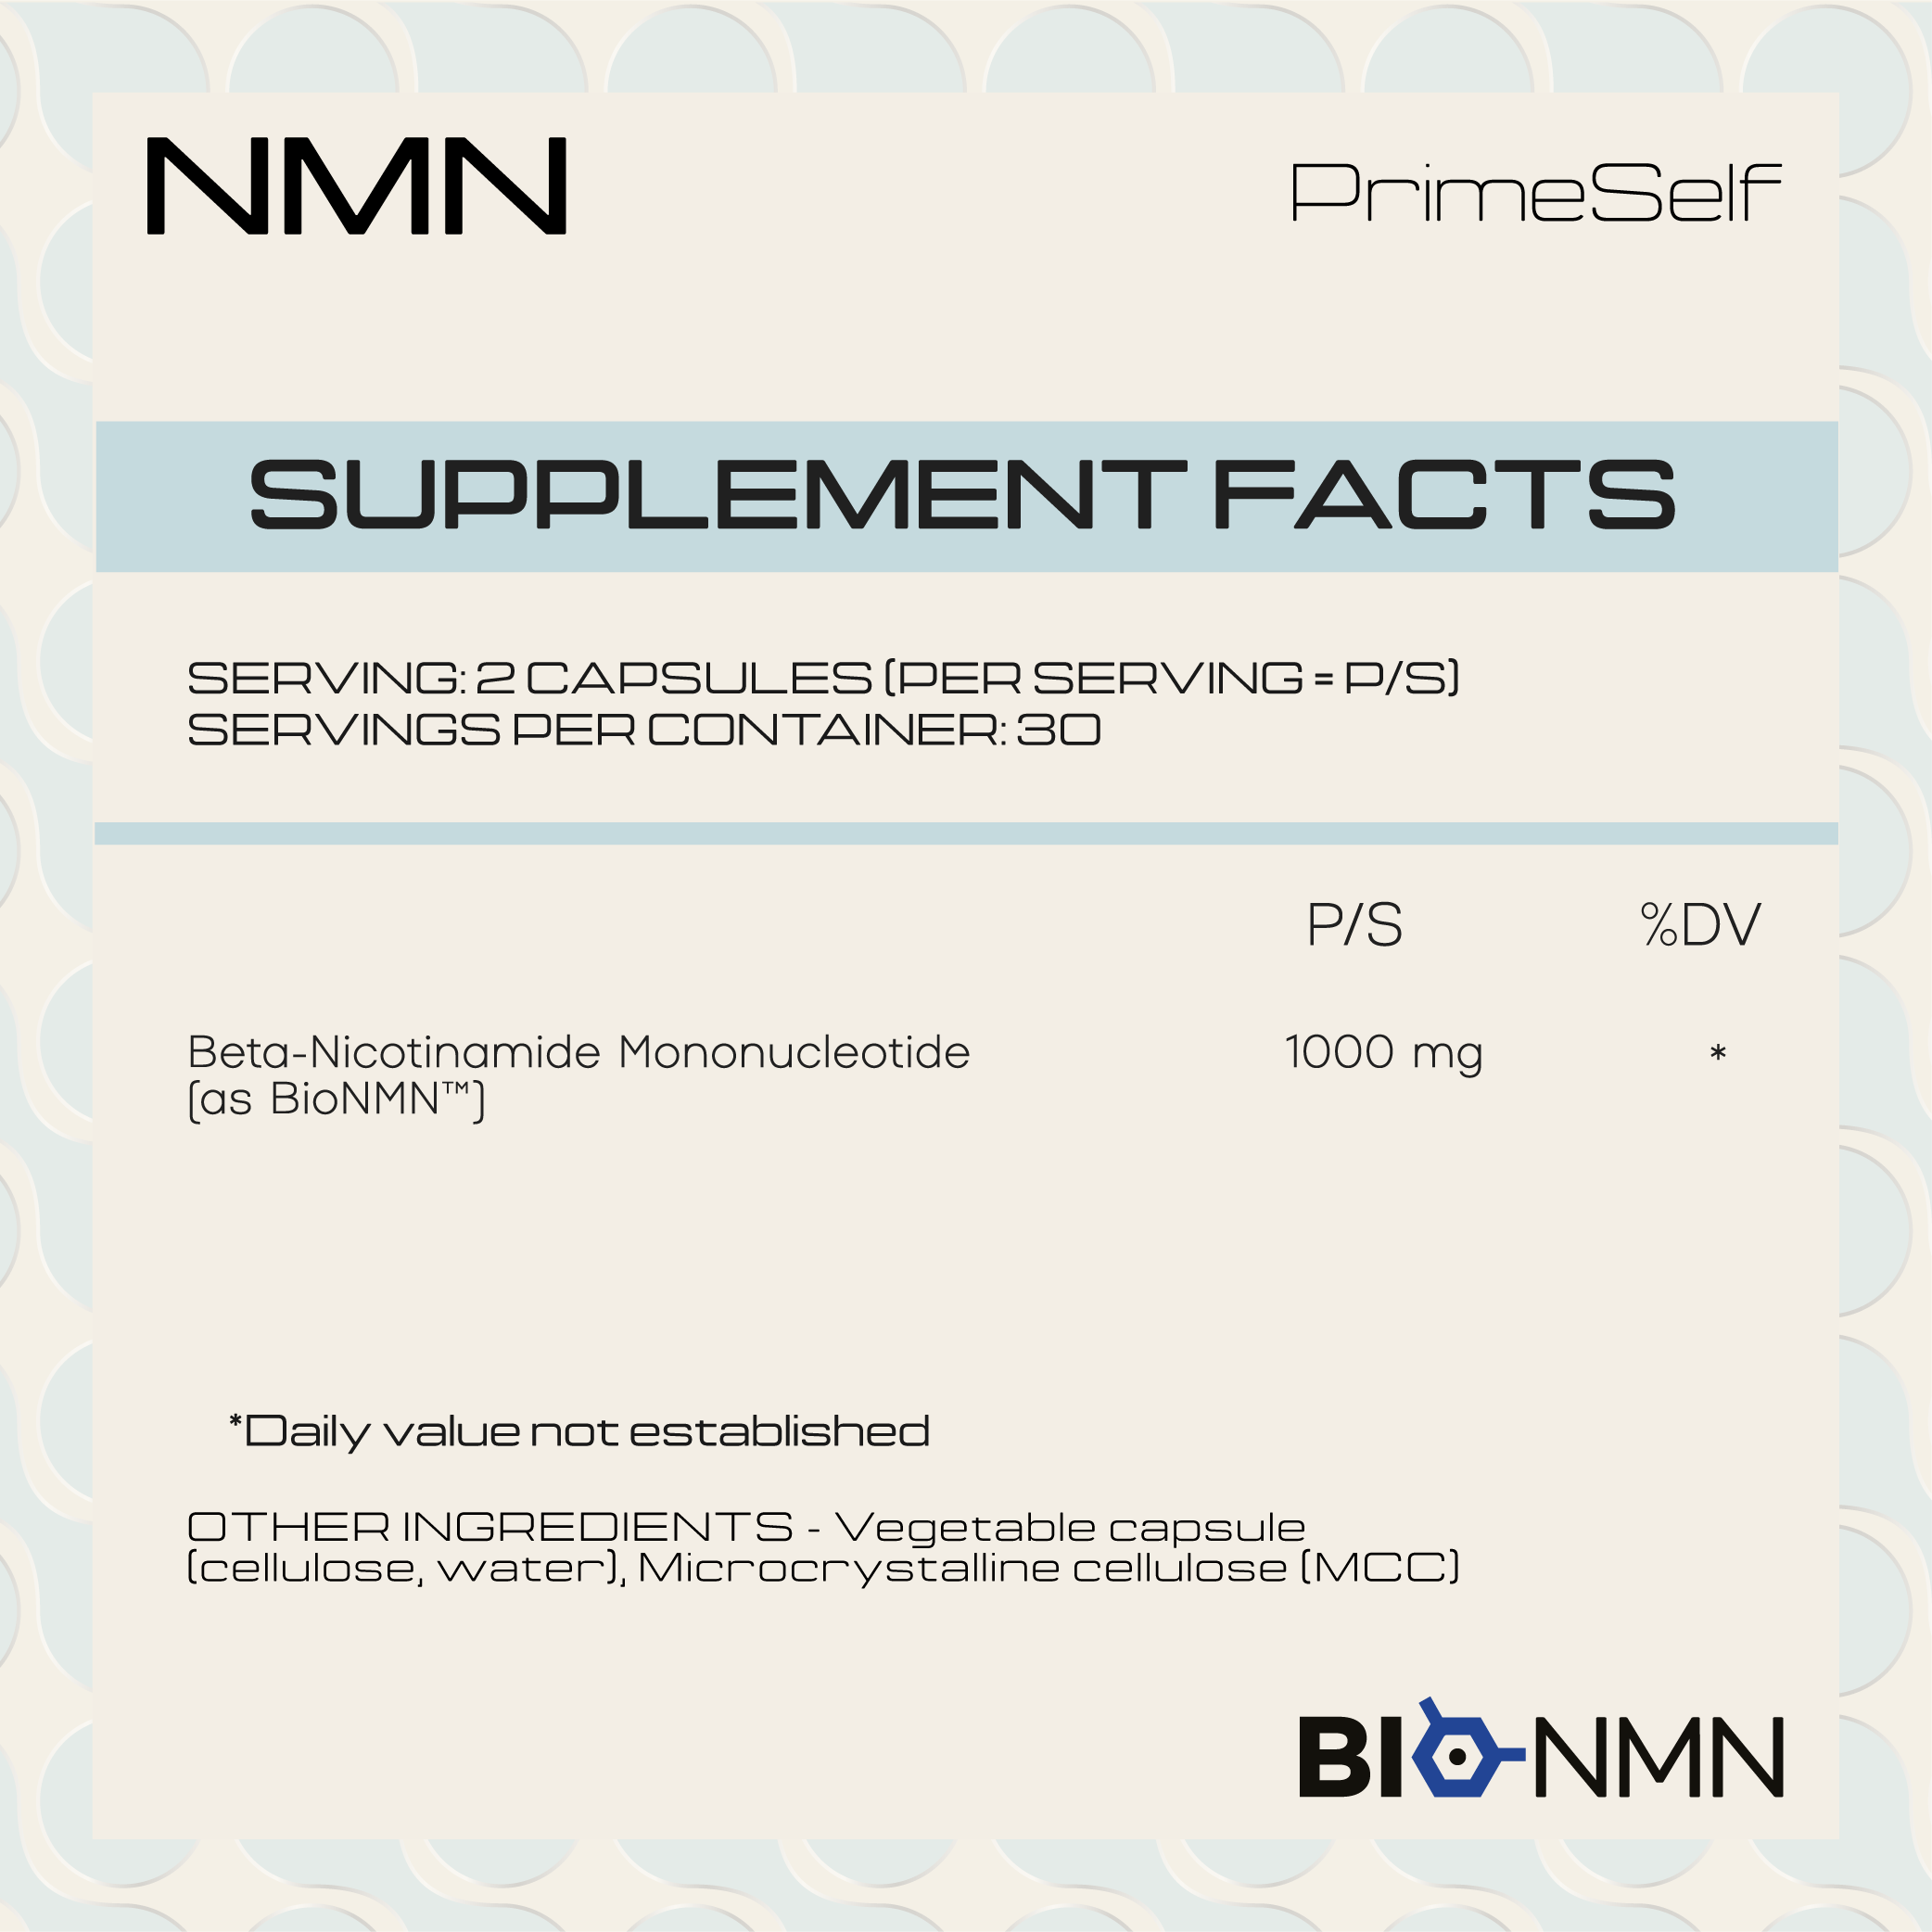 Nicotinamide Mononucleotide (NMN)